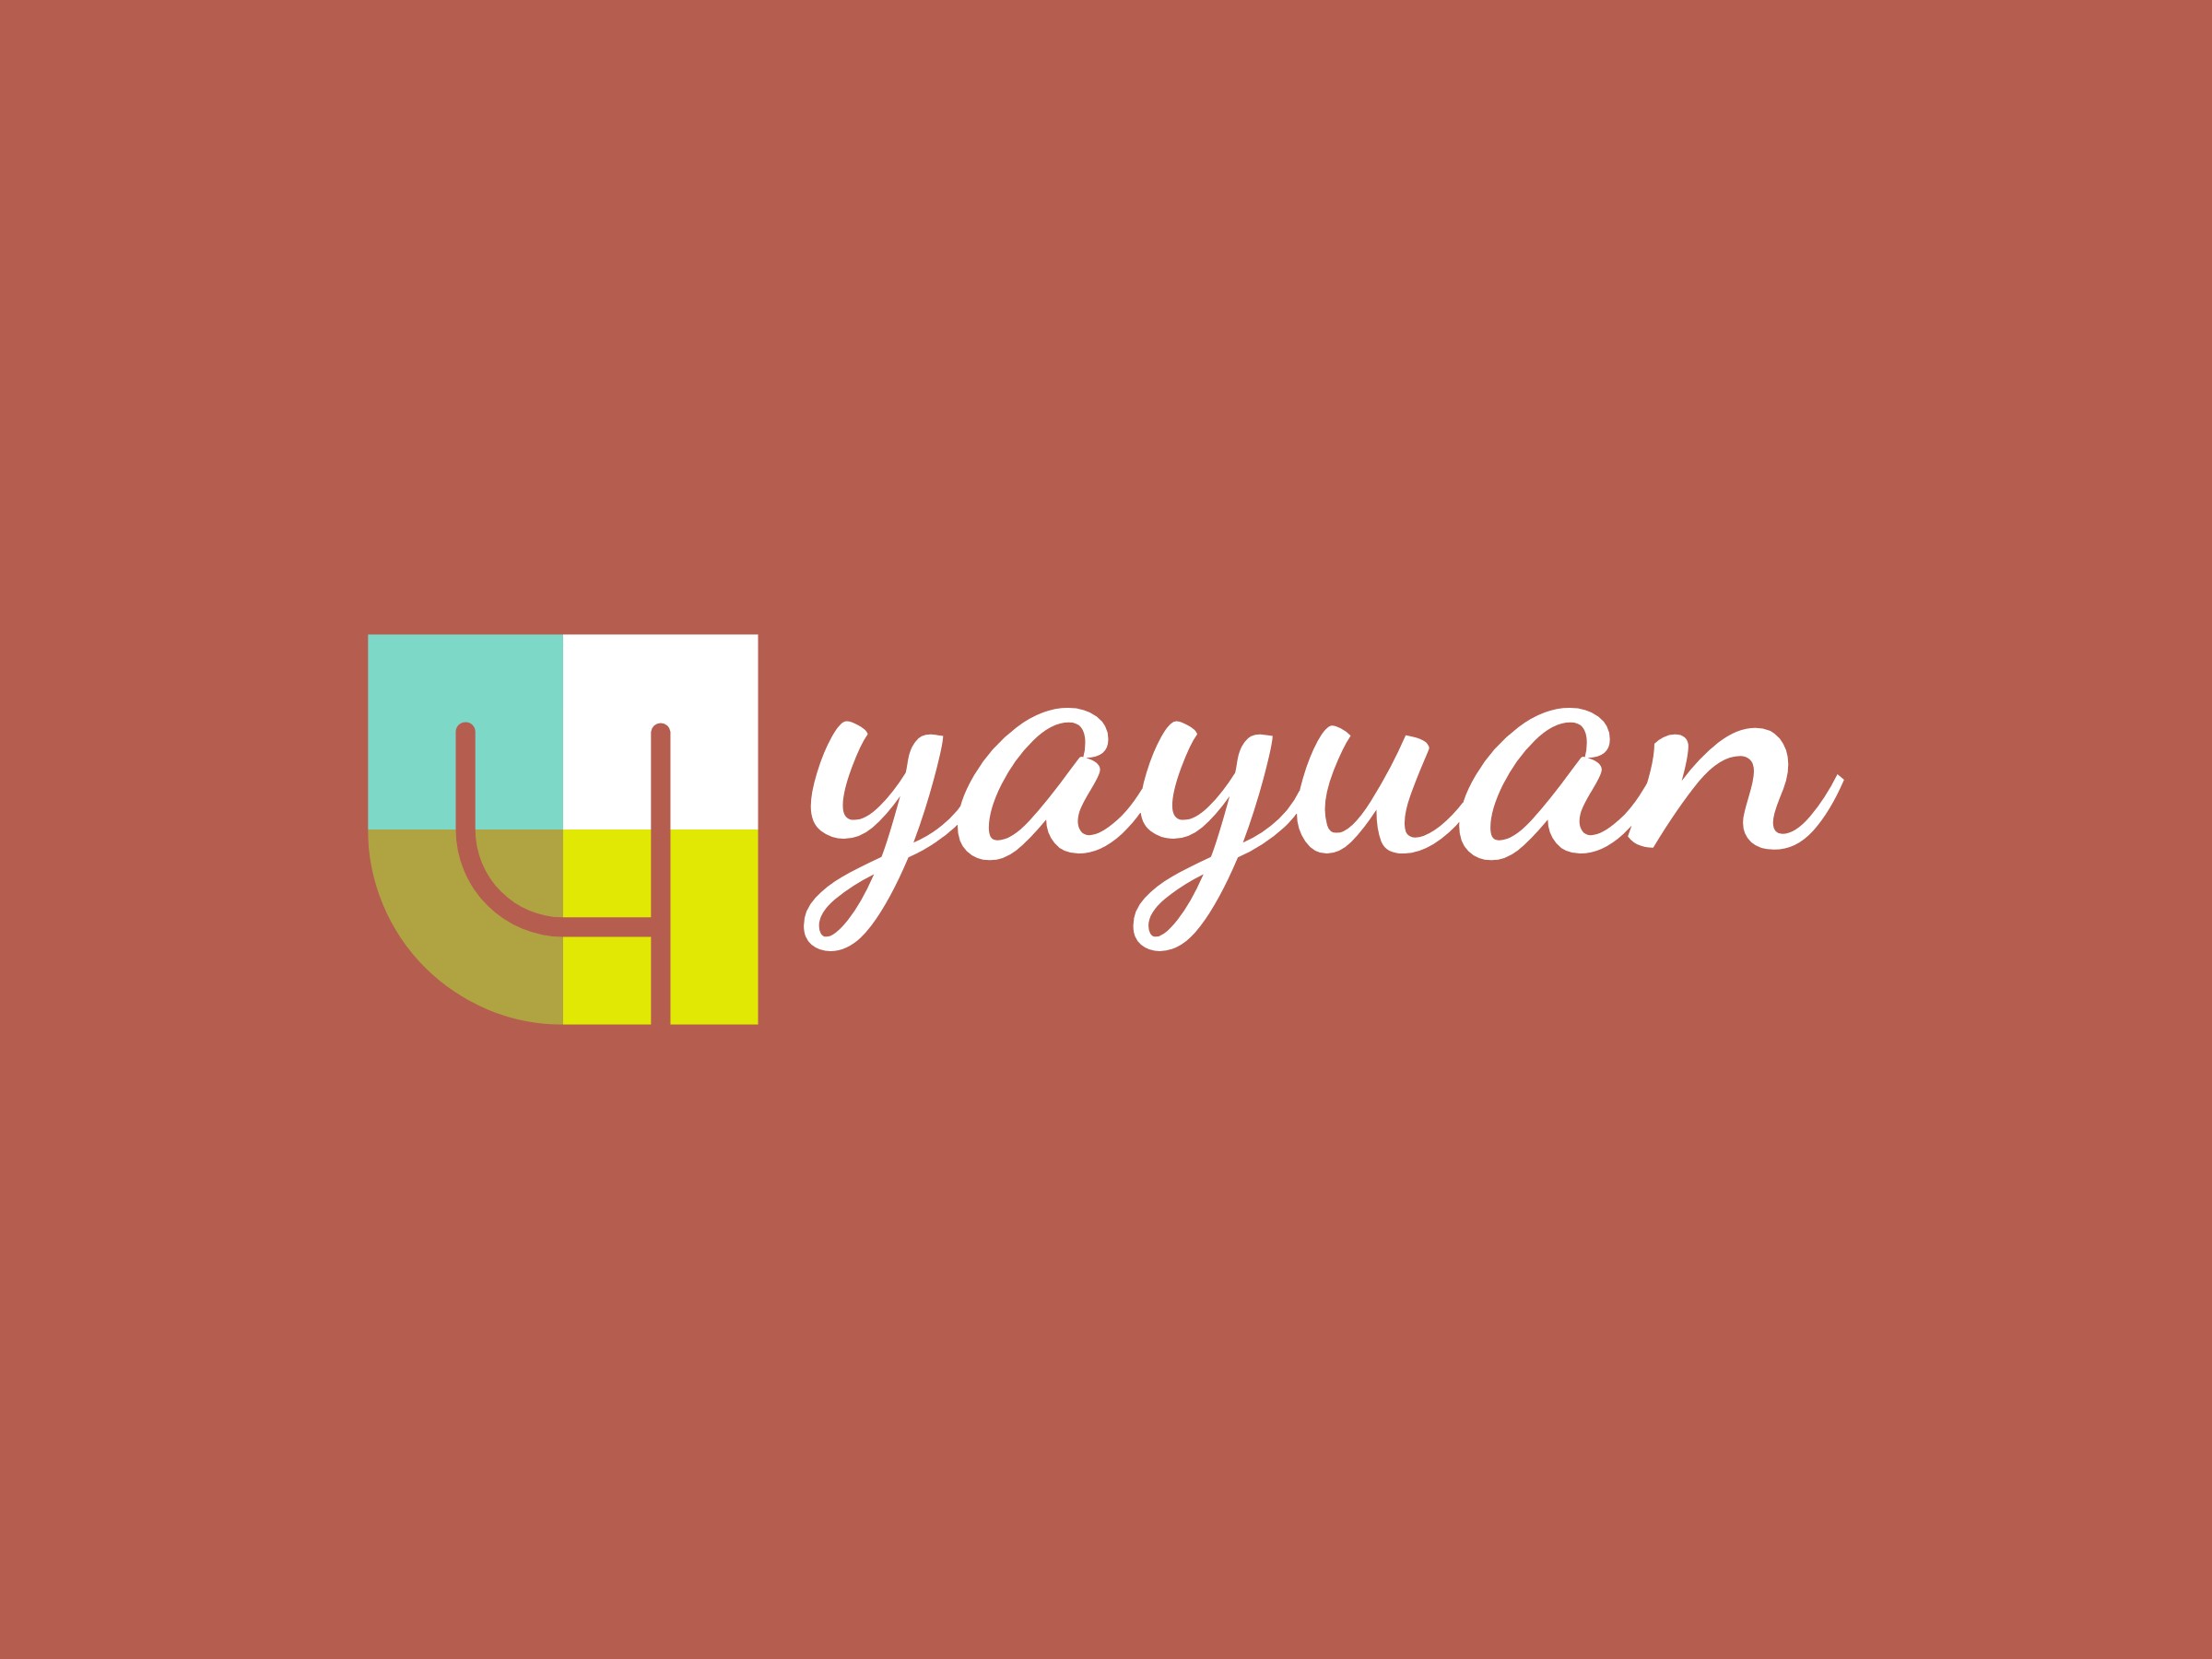 Company logo for Yayuan Fourni Asia Pte. Ltd.